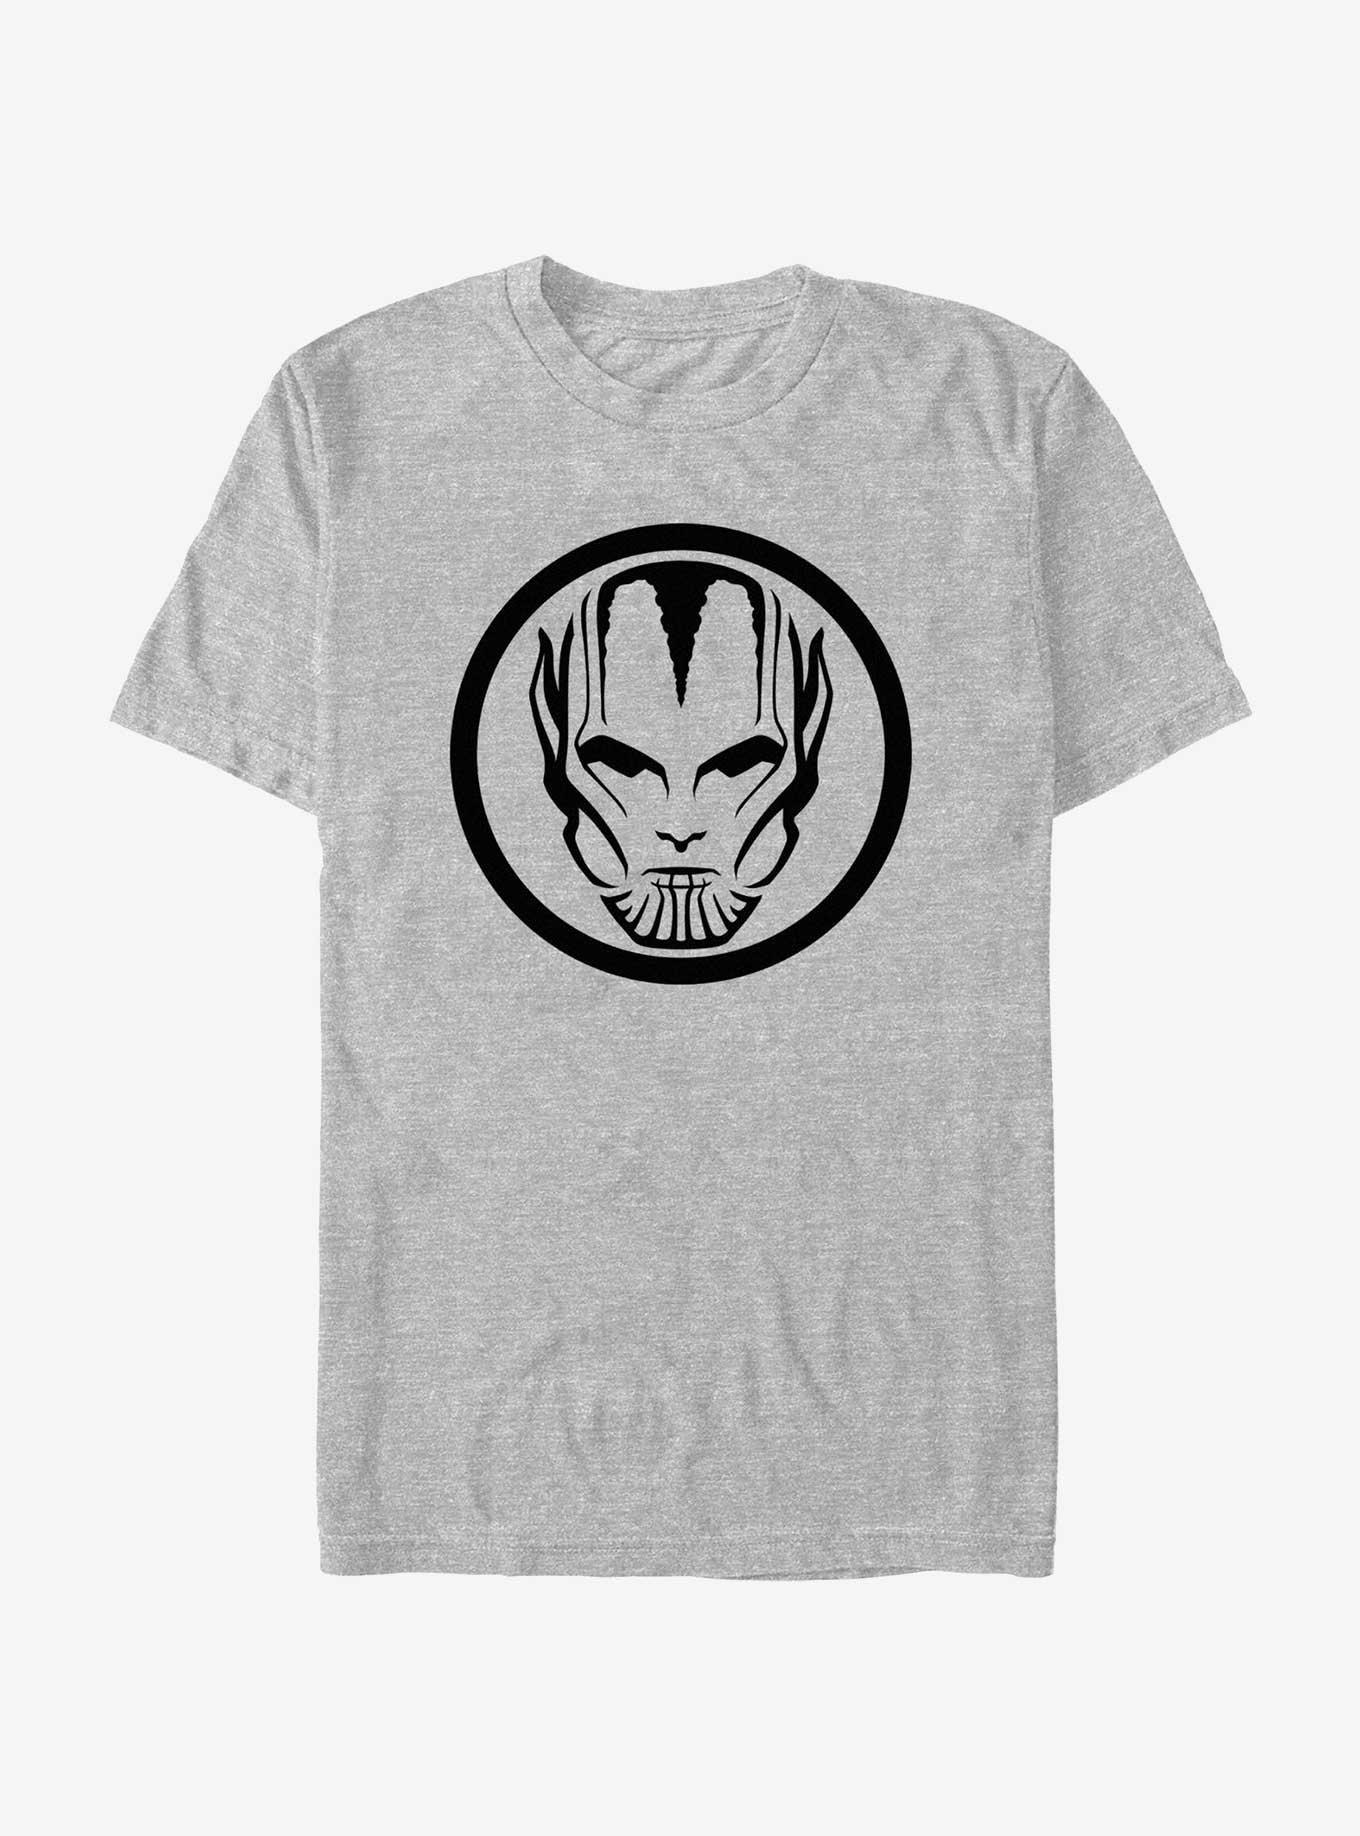 Marvel Secret Invasion Invader Icon T-Shirt